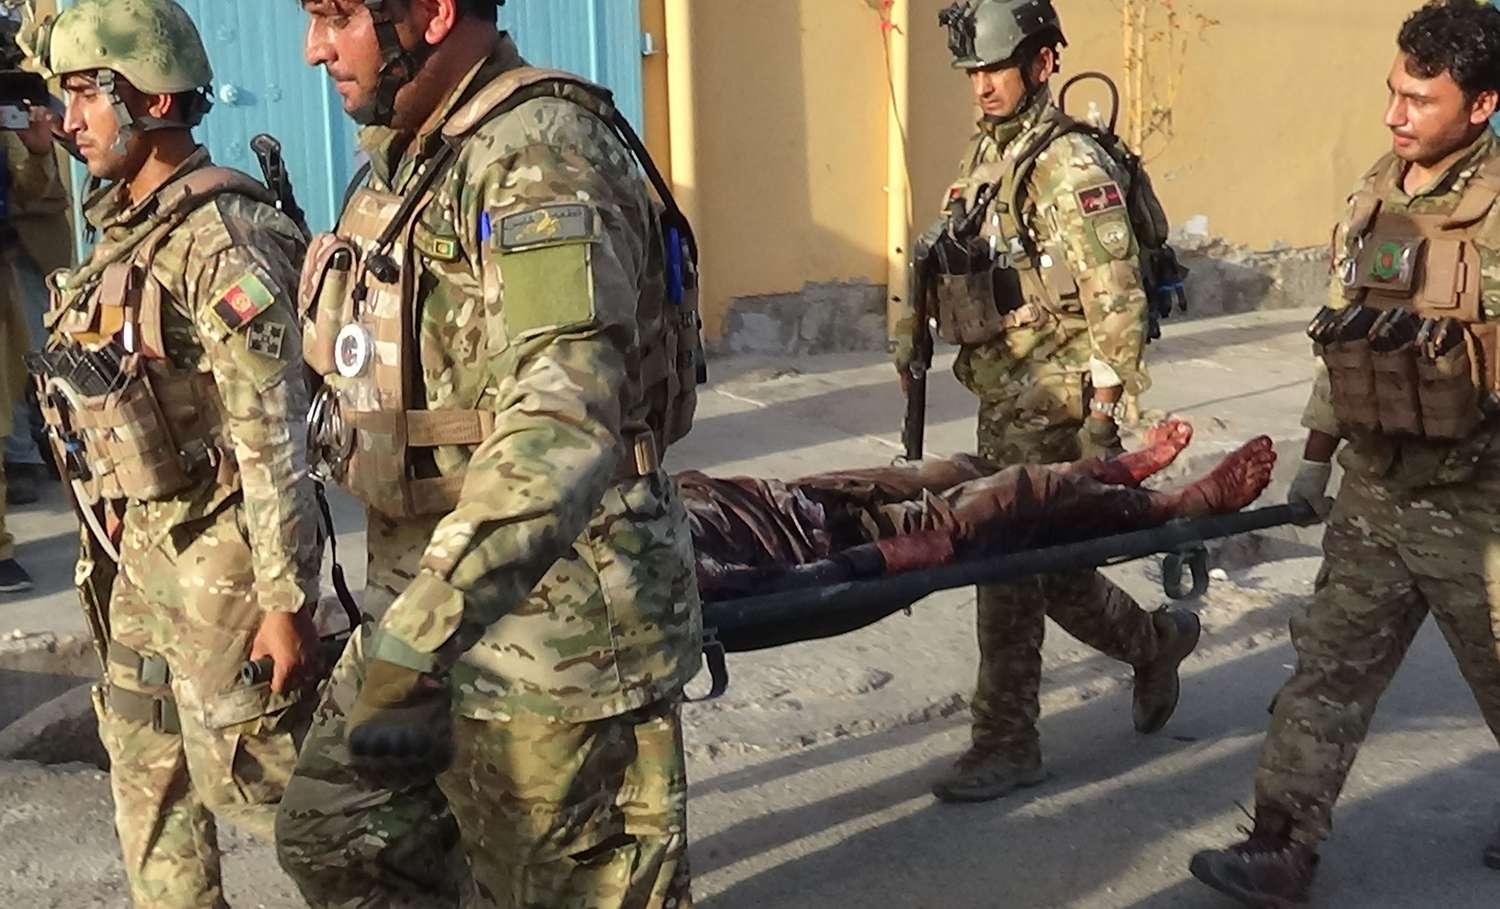 Murieron dos personas en un ataque contra un centro de formación de Afganistán